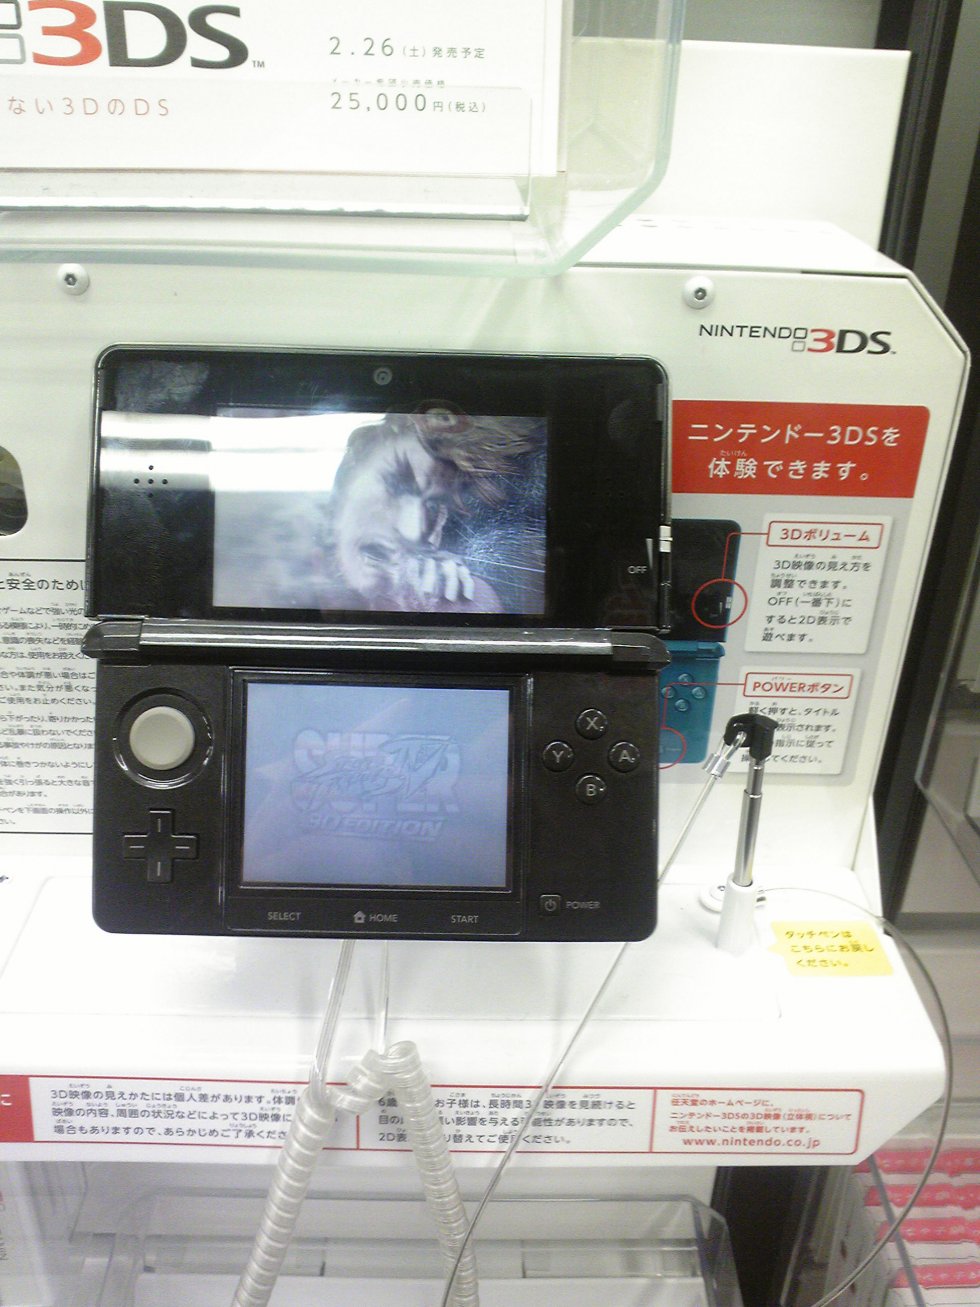 Nintendo 3DS japon test preview fevrier 2011 (11)